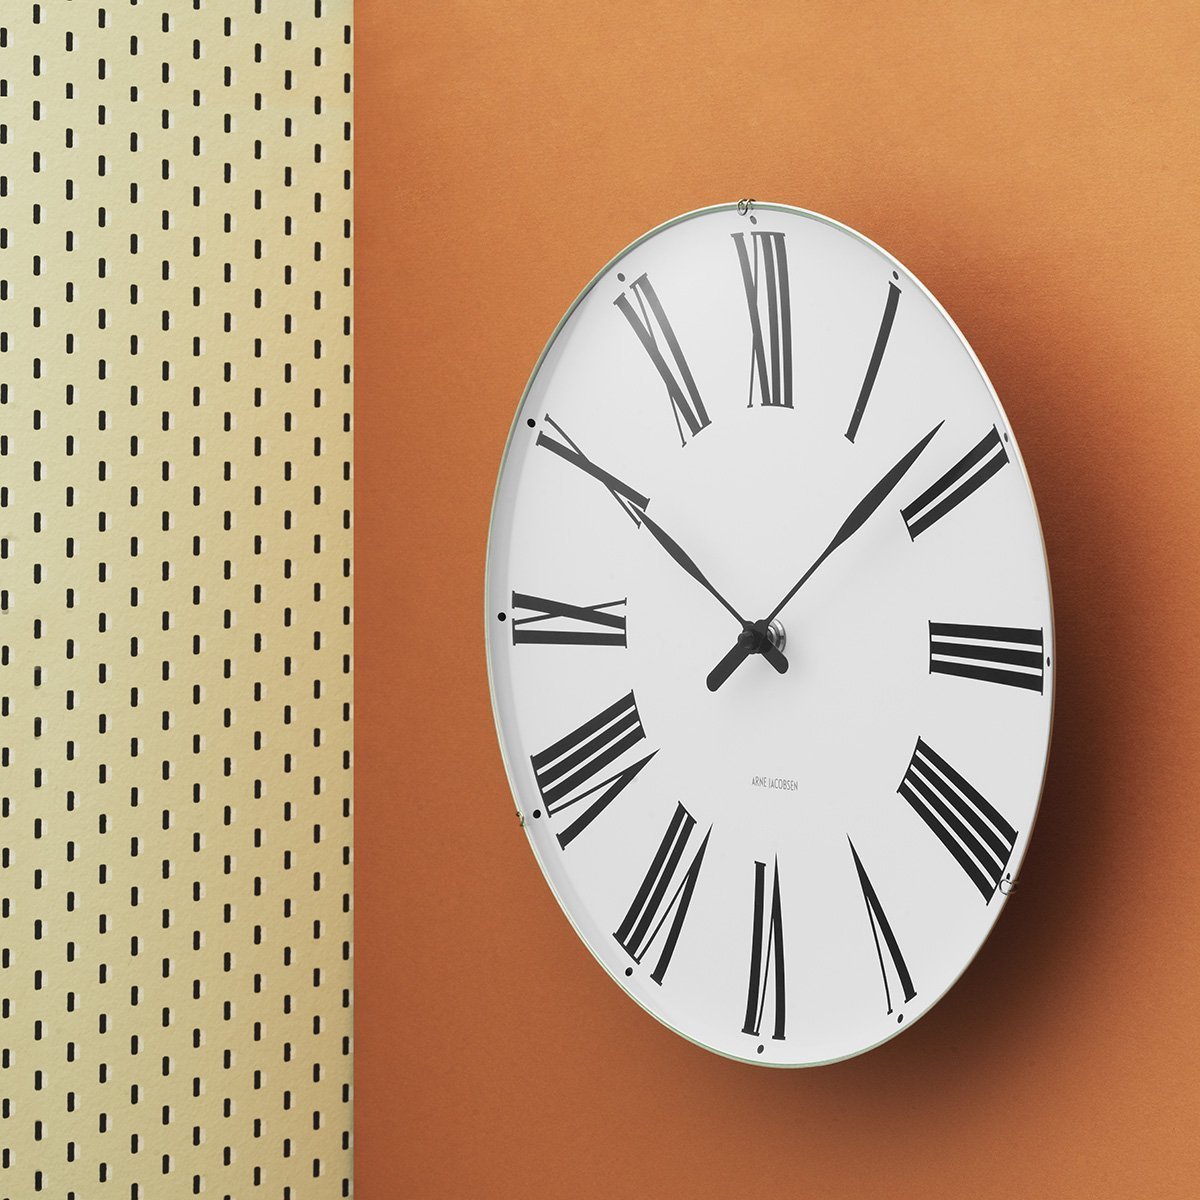 Arne Jacobsen Roman Wall Clock, 16 cm